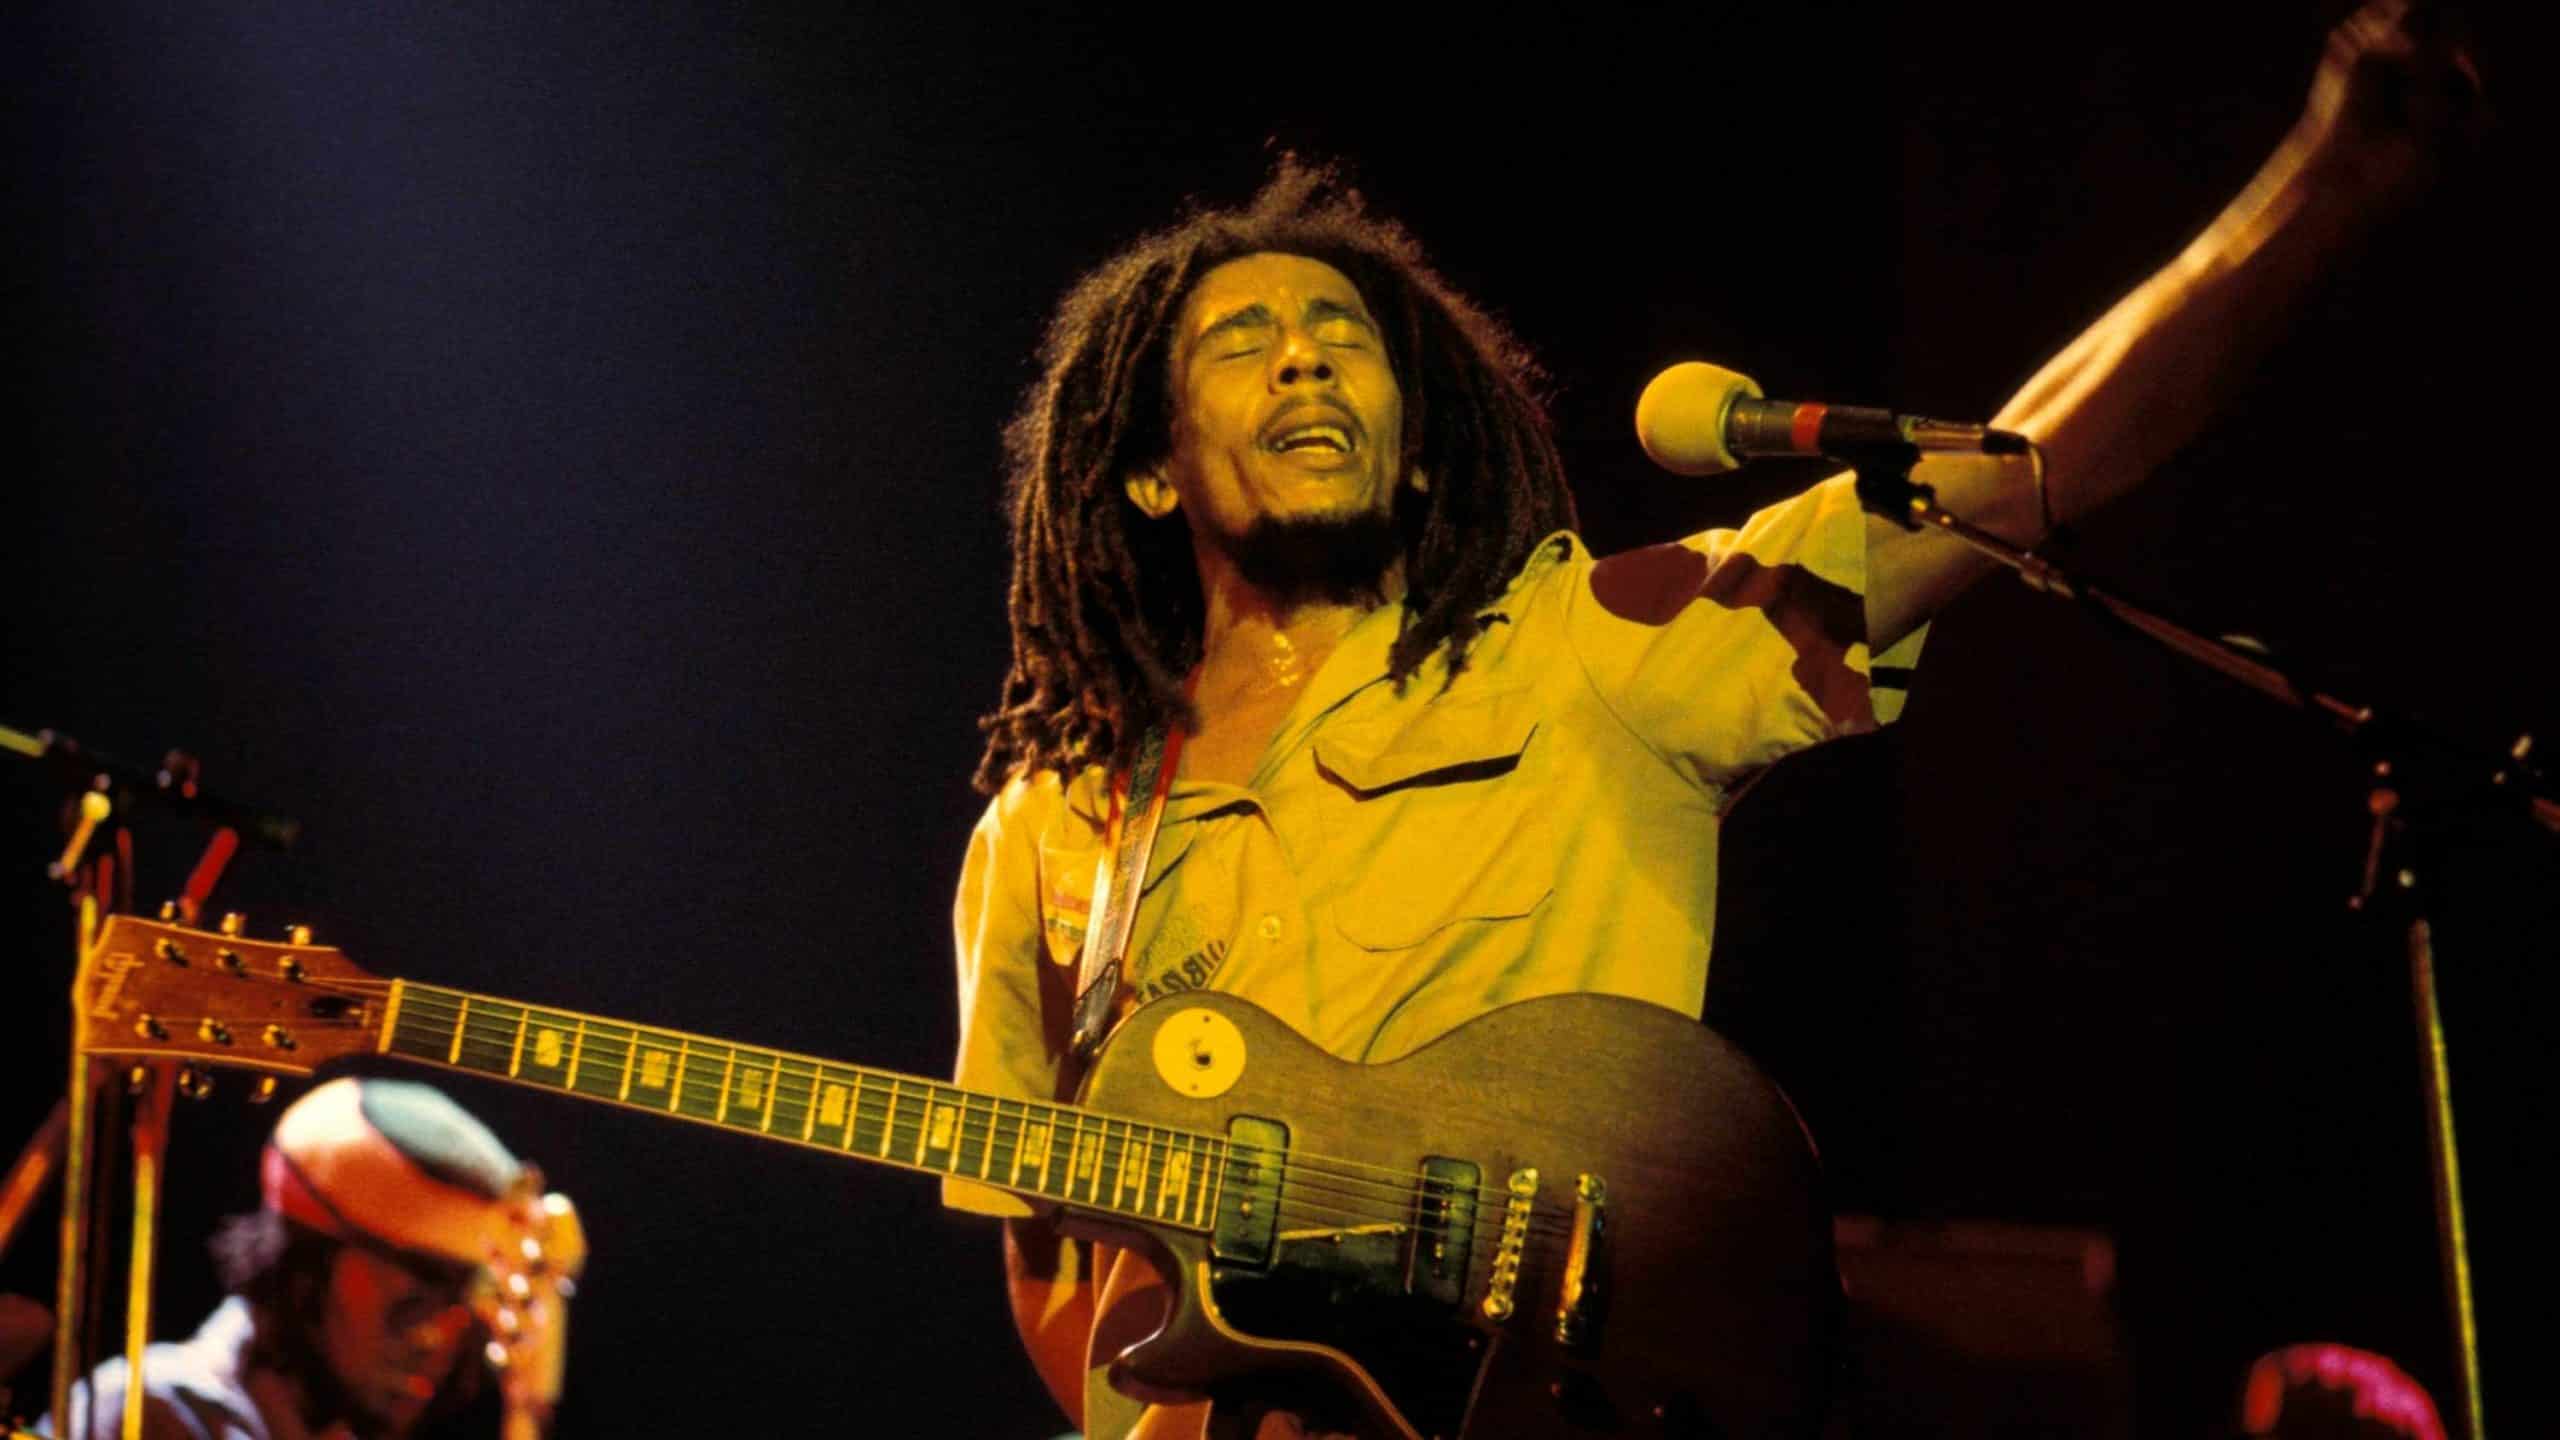 Bob Marley's iconic pose